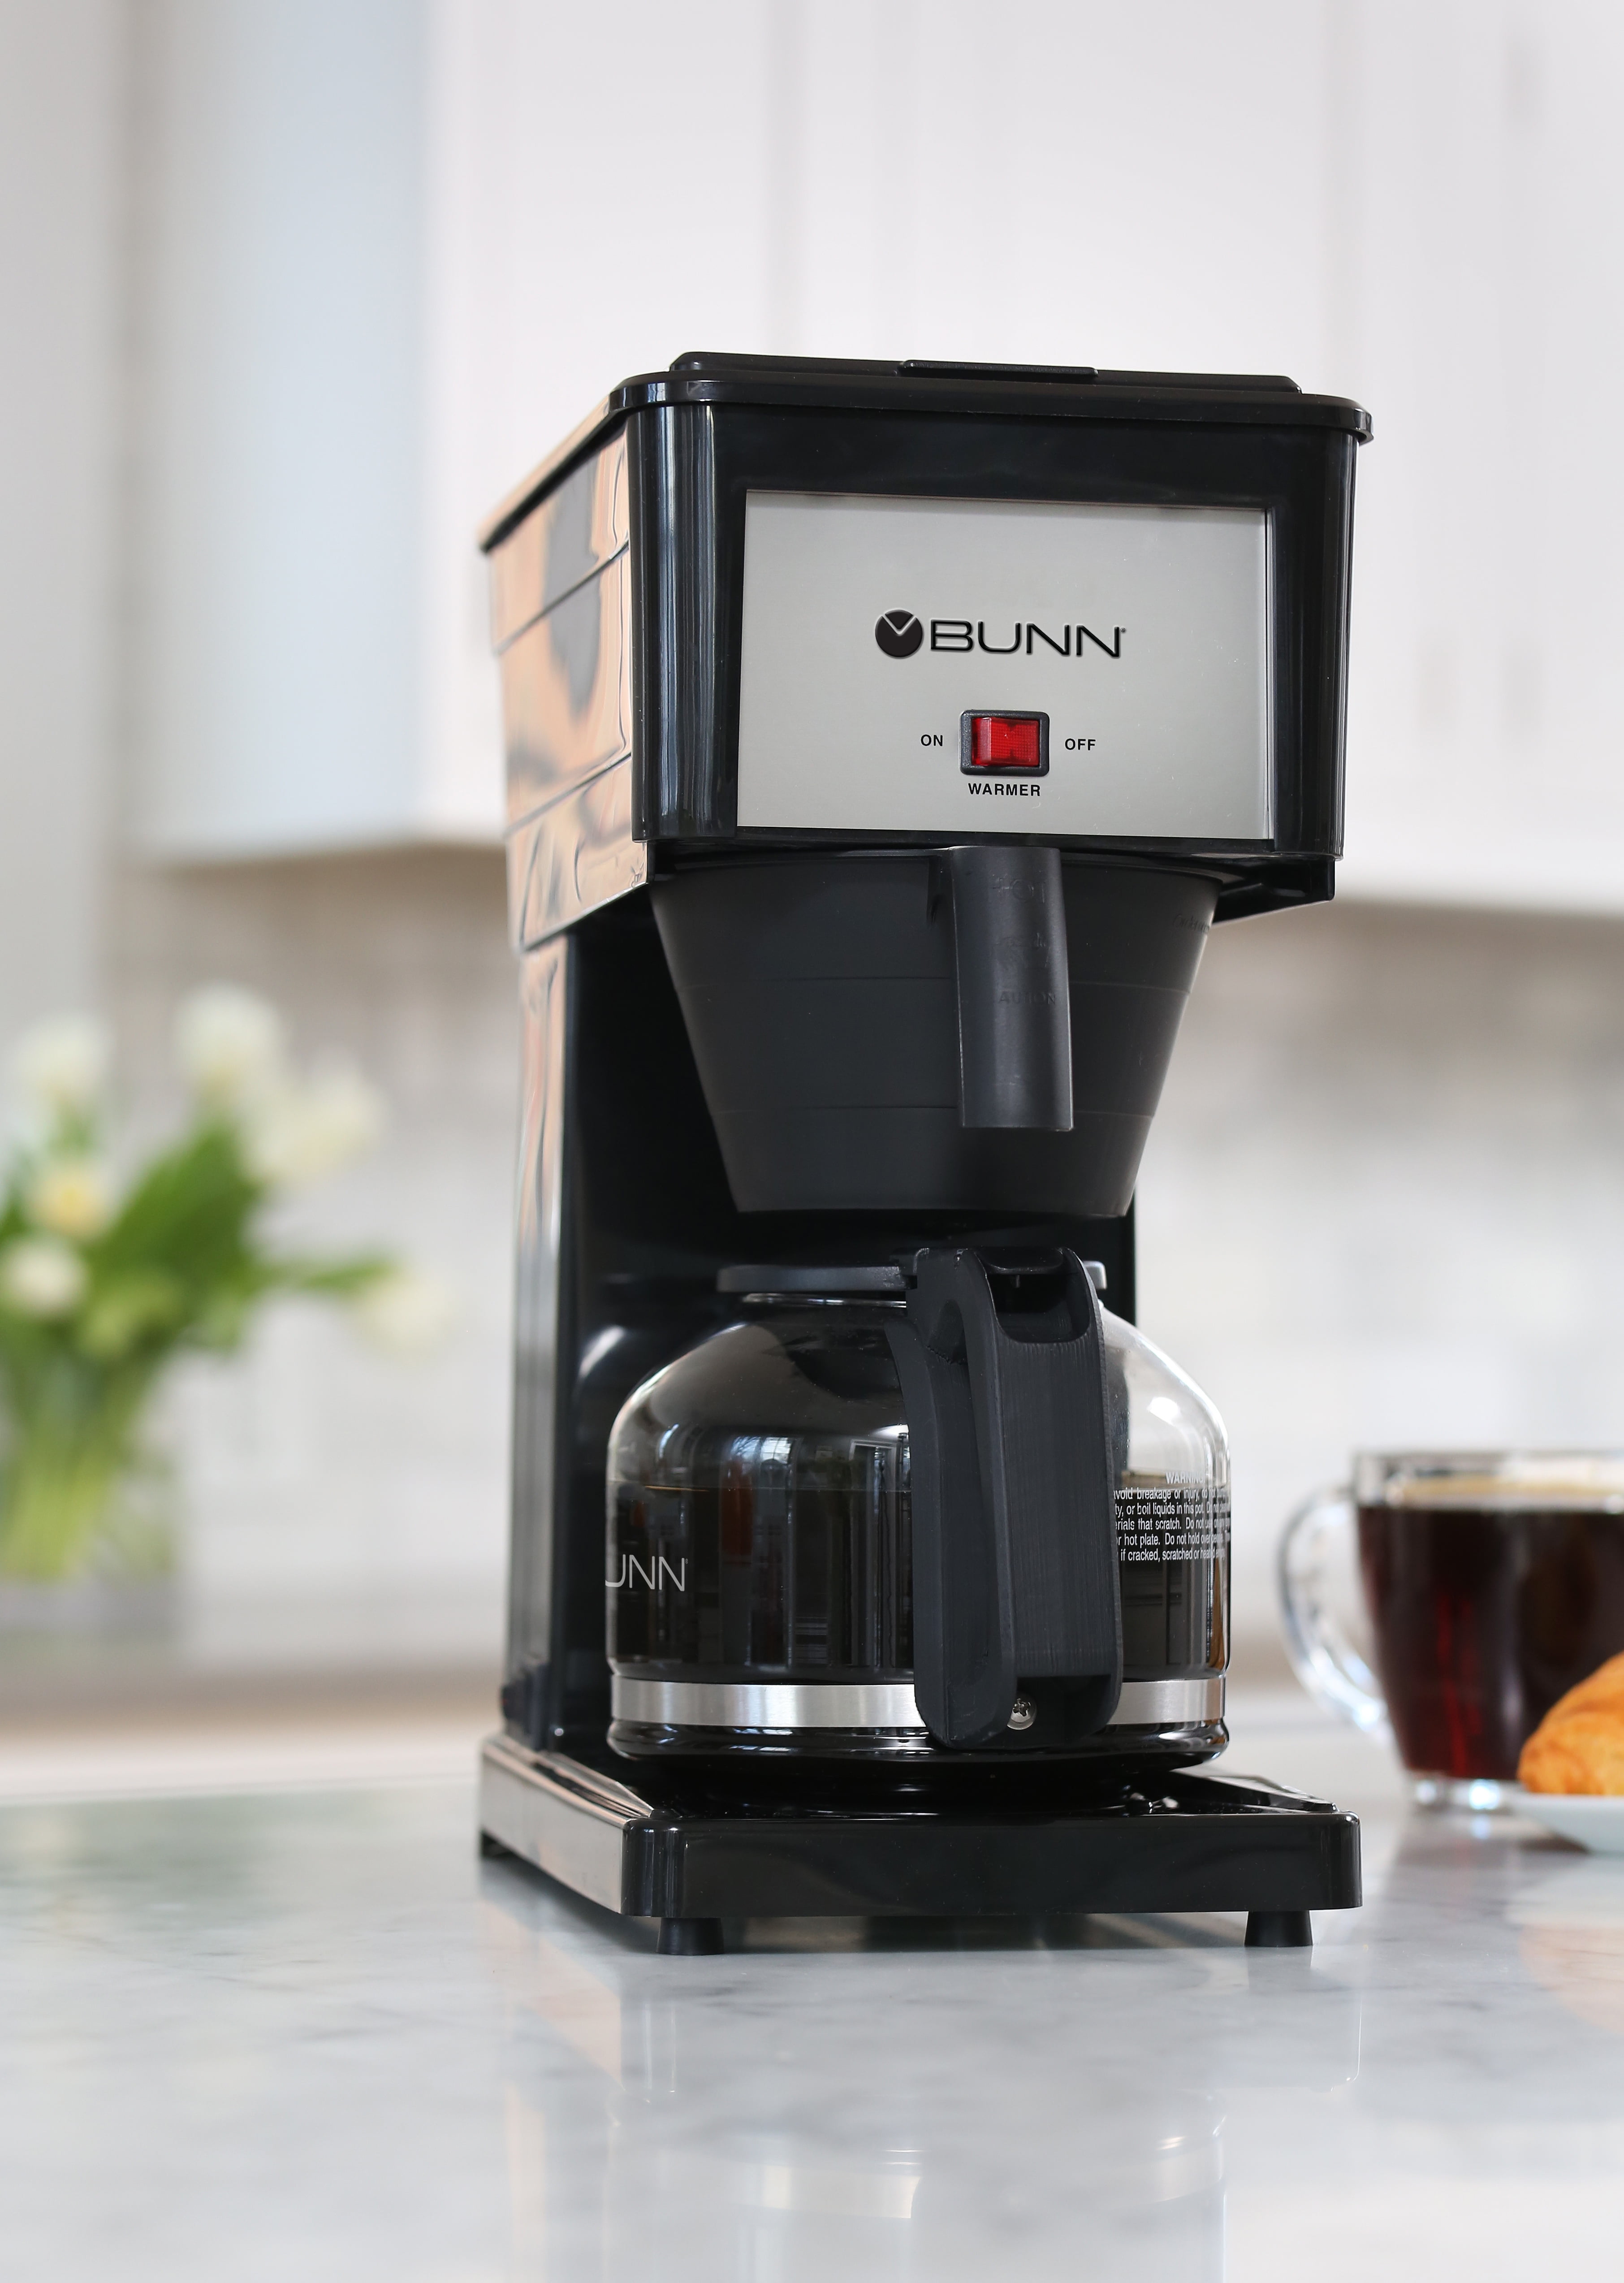 SBS Speed Brew Select 10 Cup Coffee Maker,Black